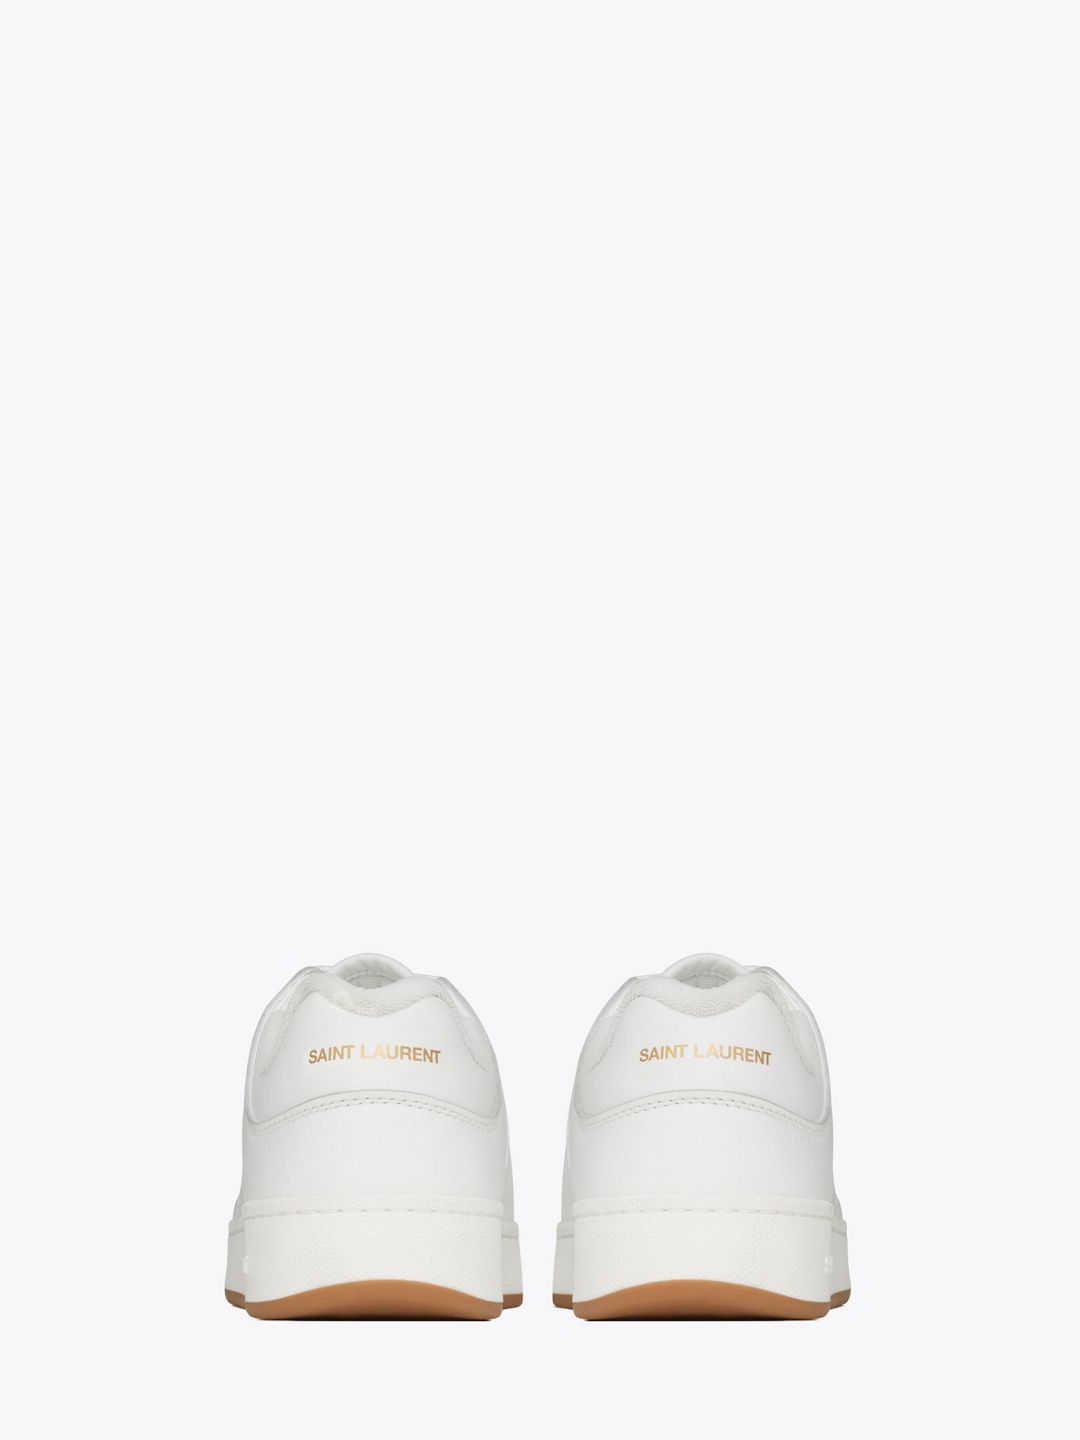 Sleek White Calf Leather Low-Top Sneakers